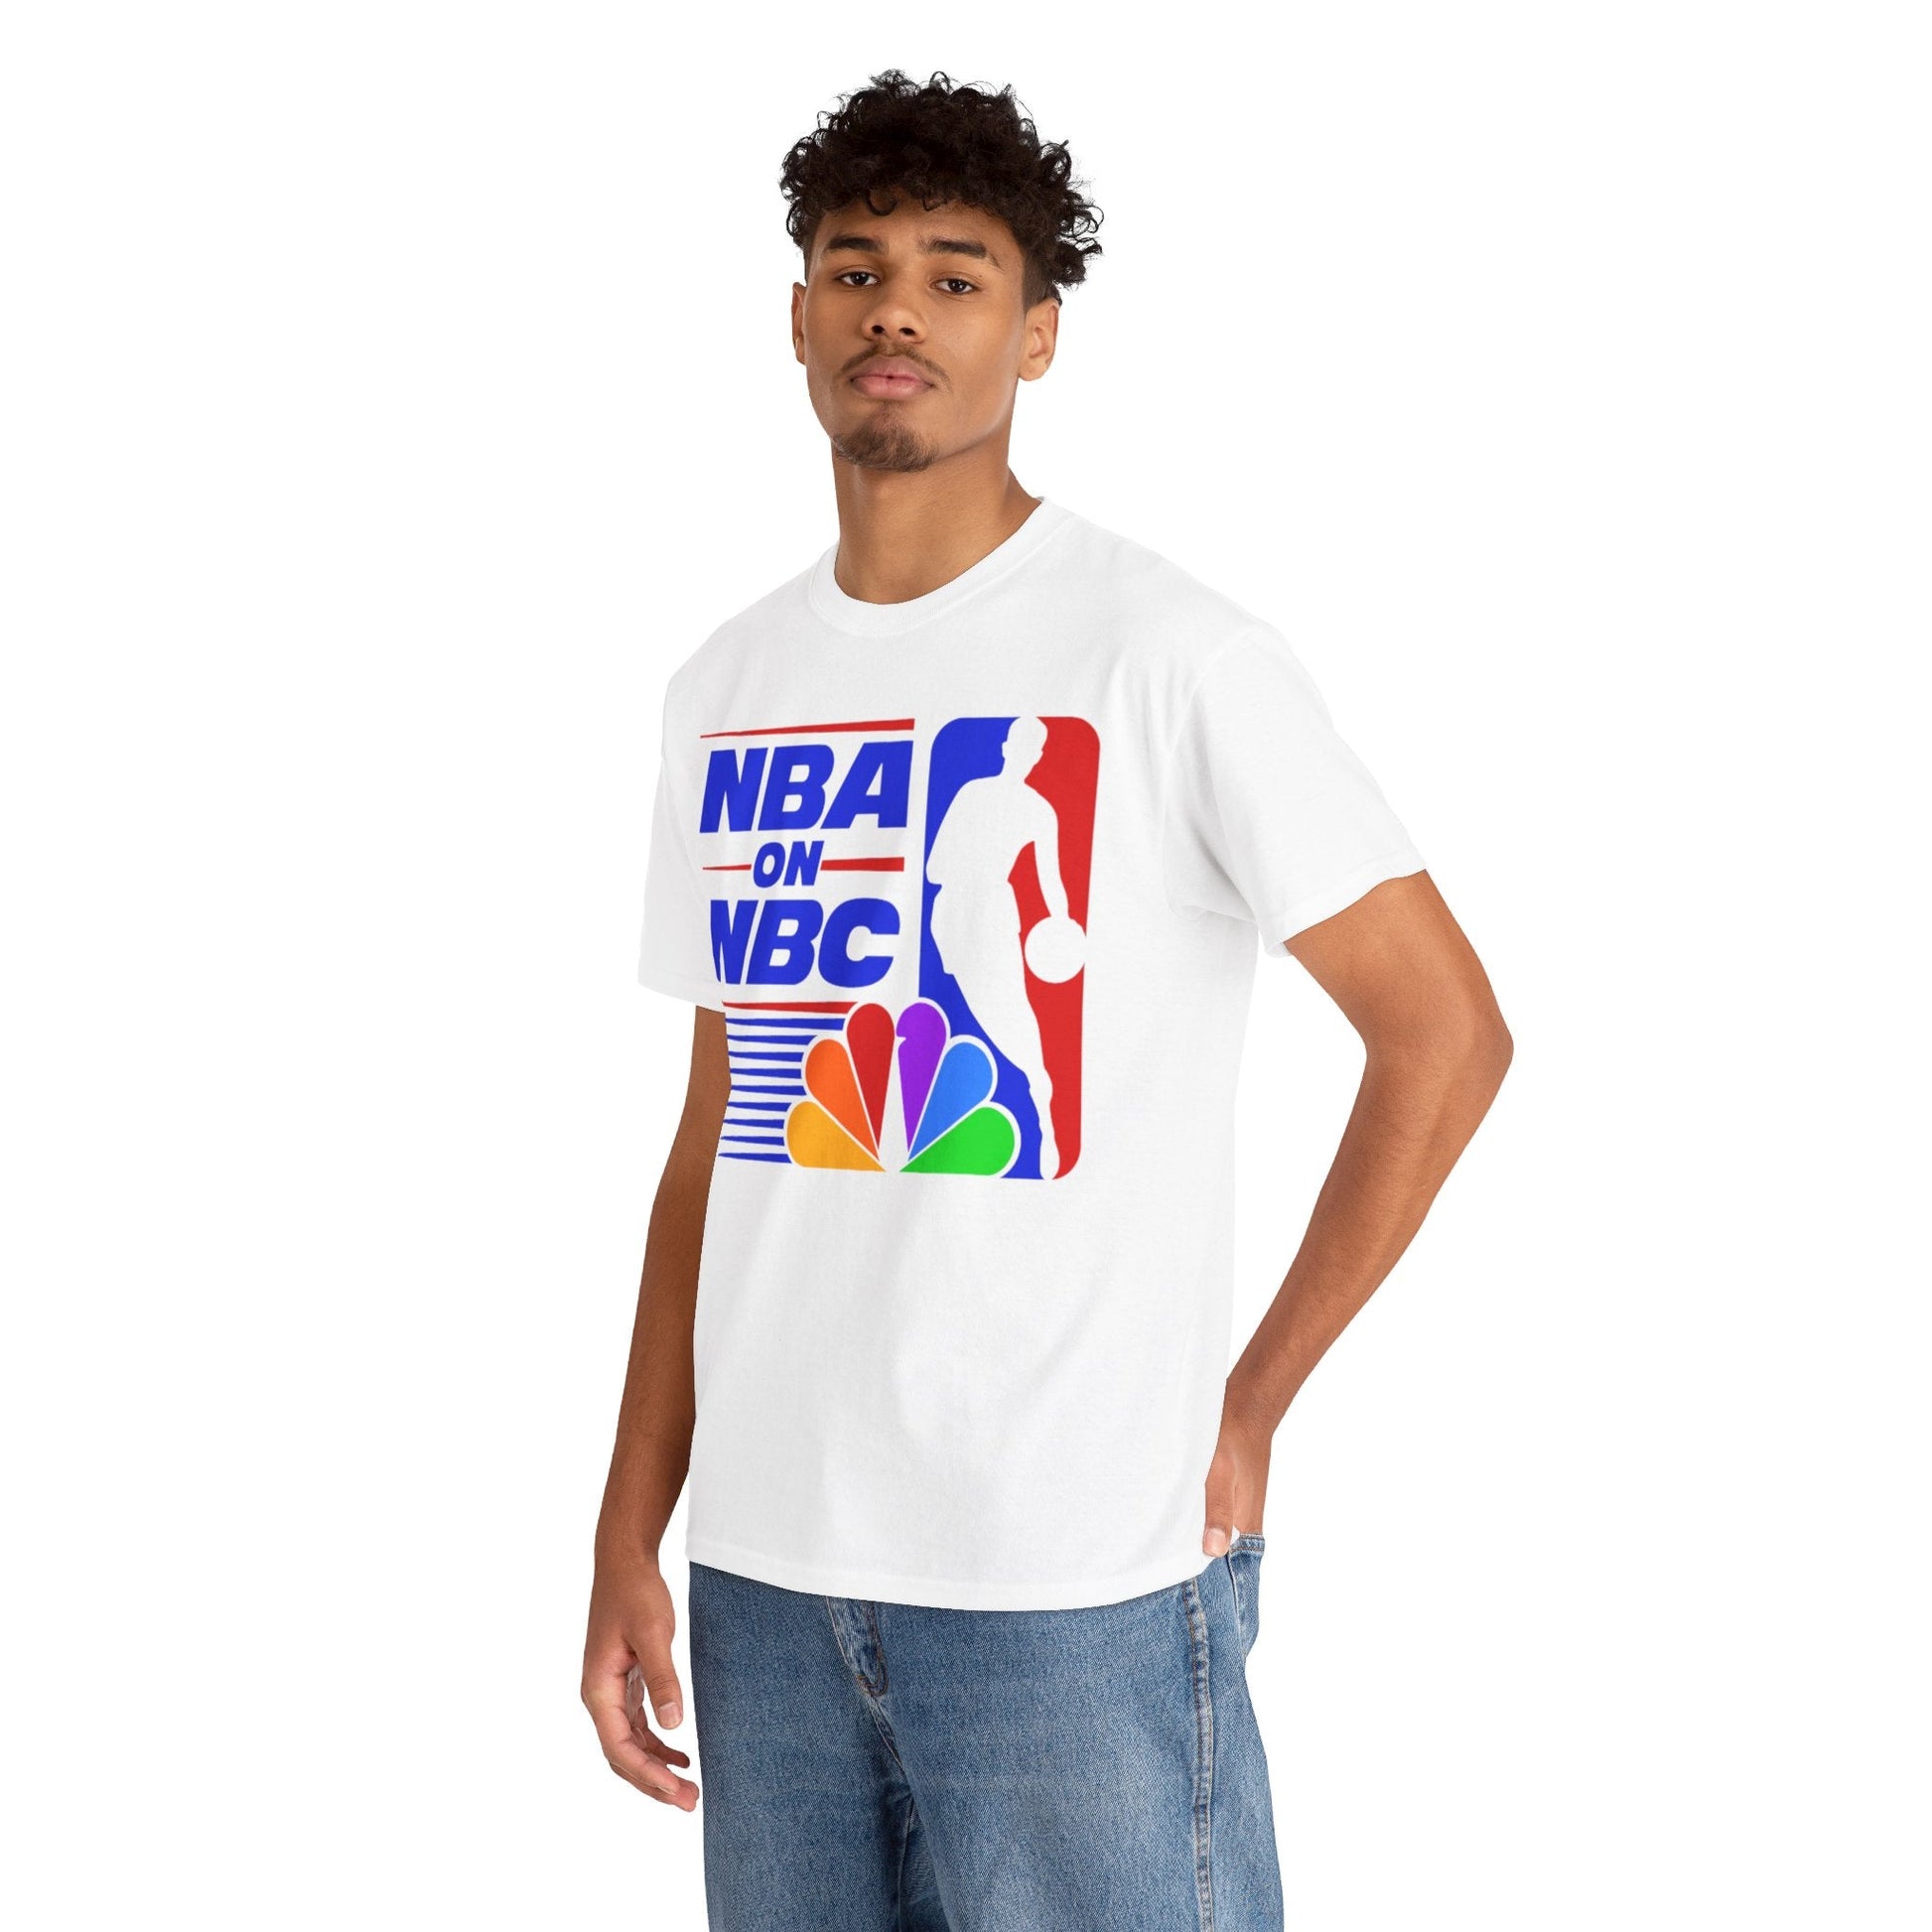 Retro Vintage Style NBA Basketball on TV Classic T - Shirt - RetroTeeShop